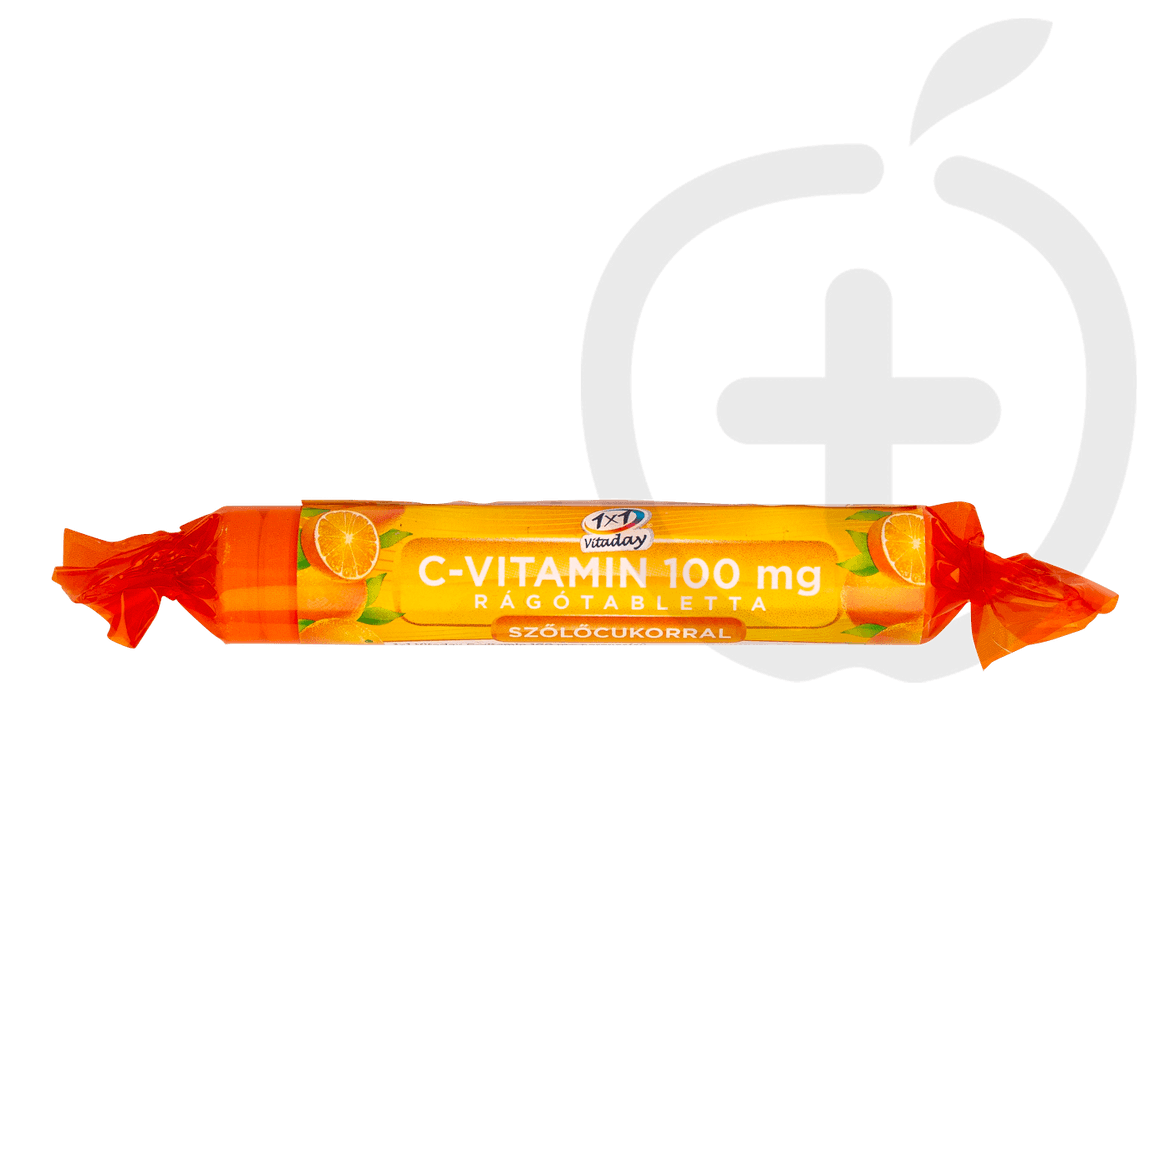 1x1 Vitaday C-vitamin 100 mg narancs ízű rágótabletta 17 db